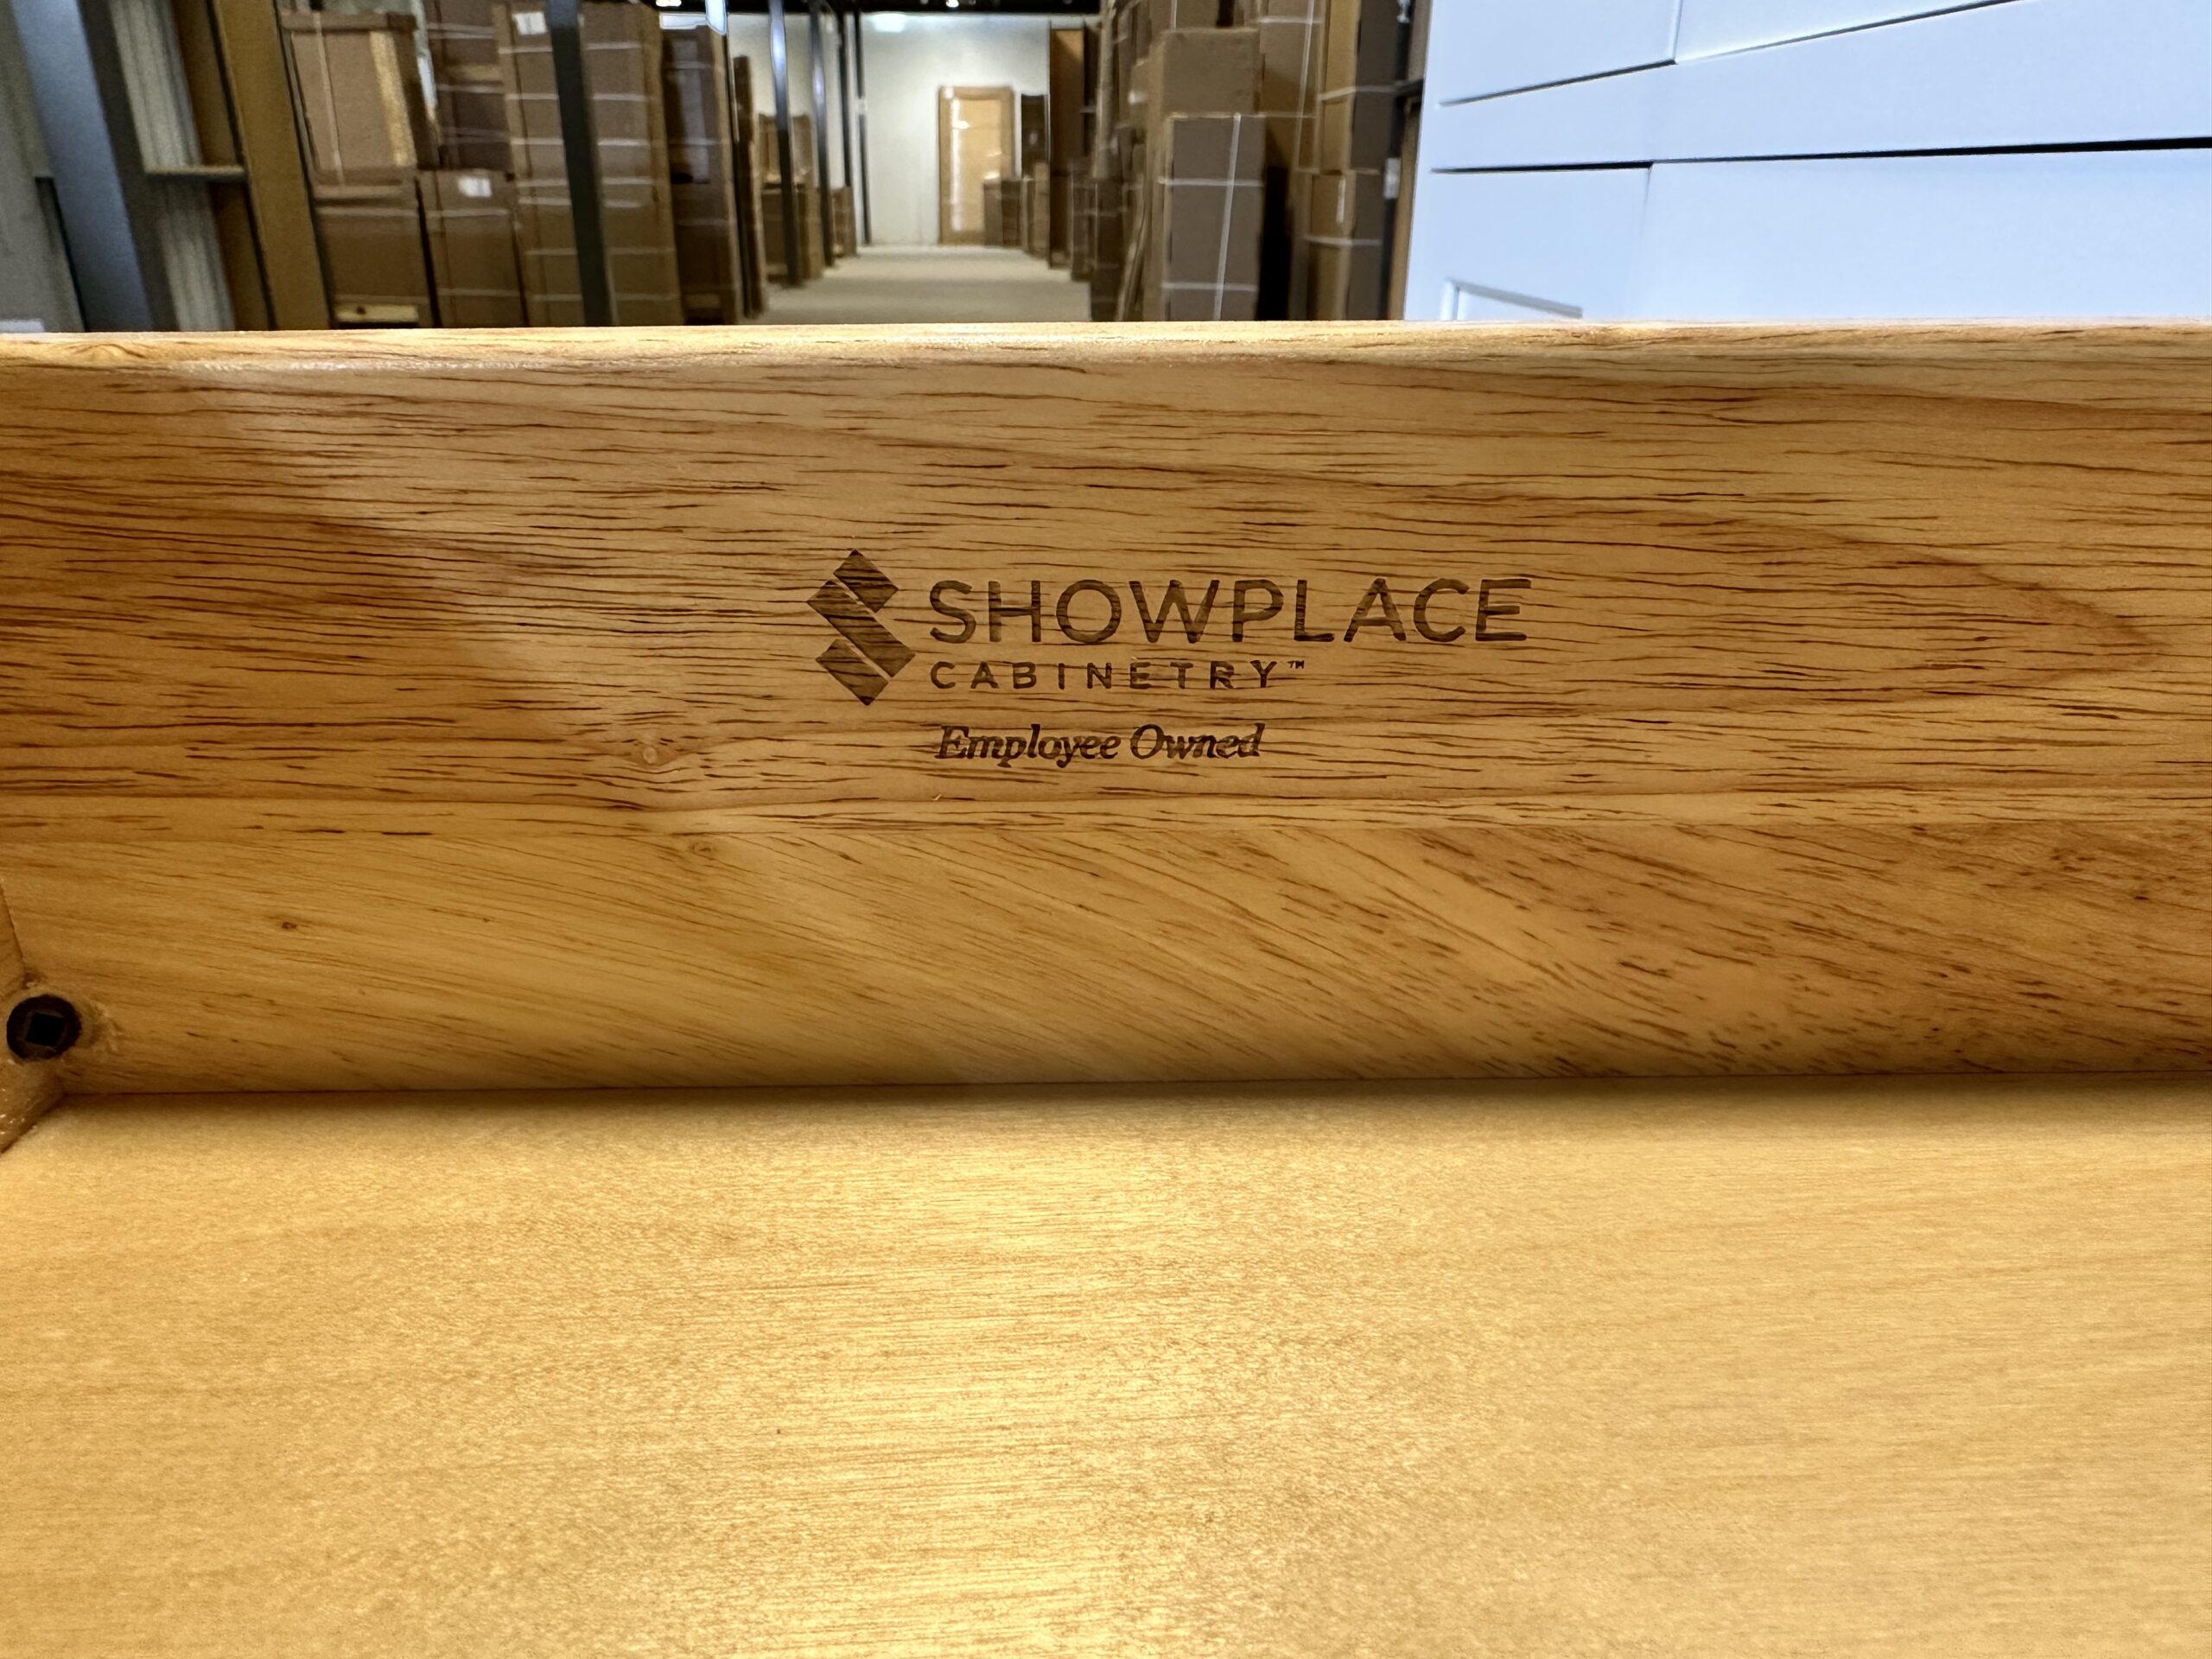 drawer box with showplace logo